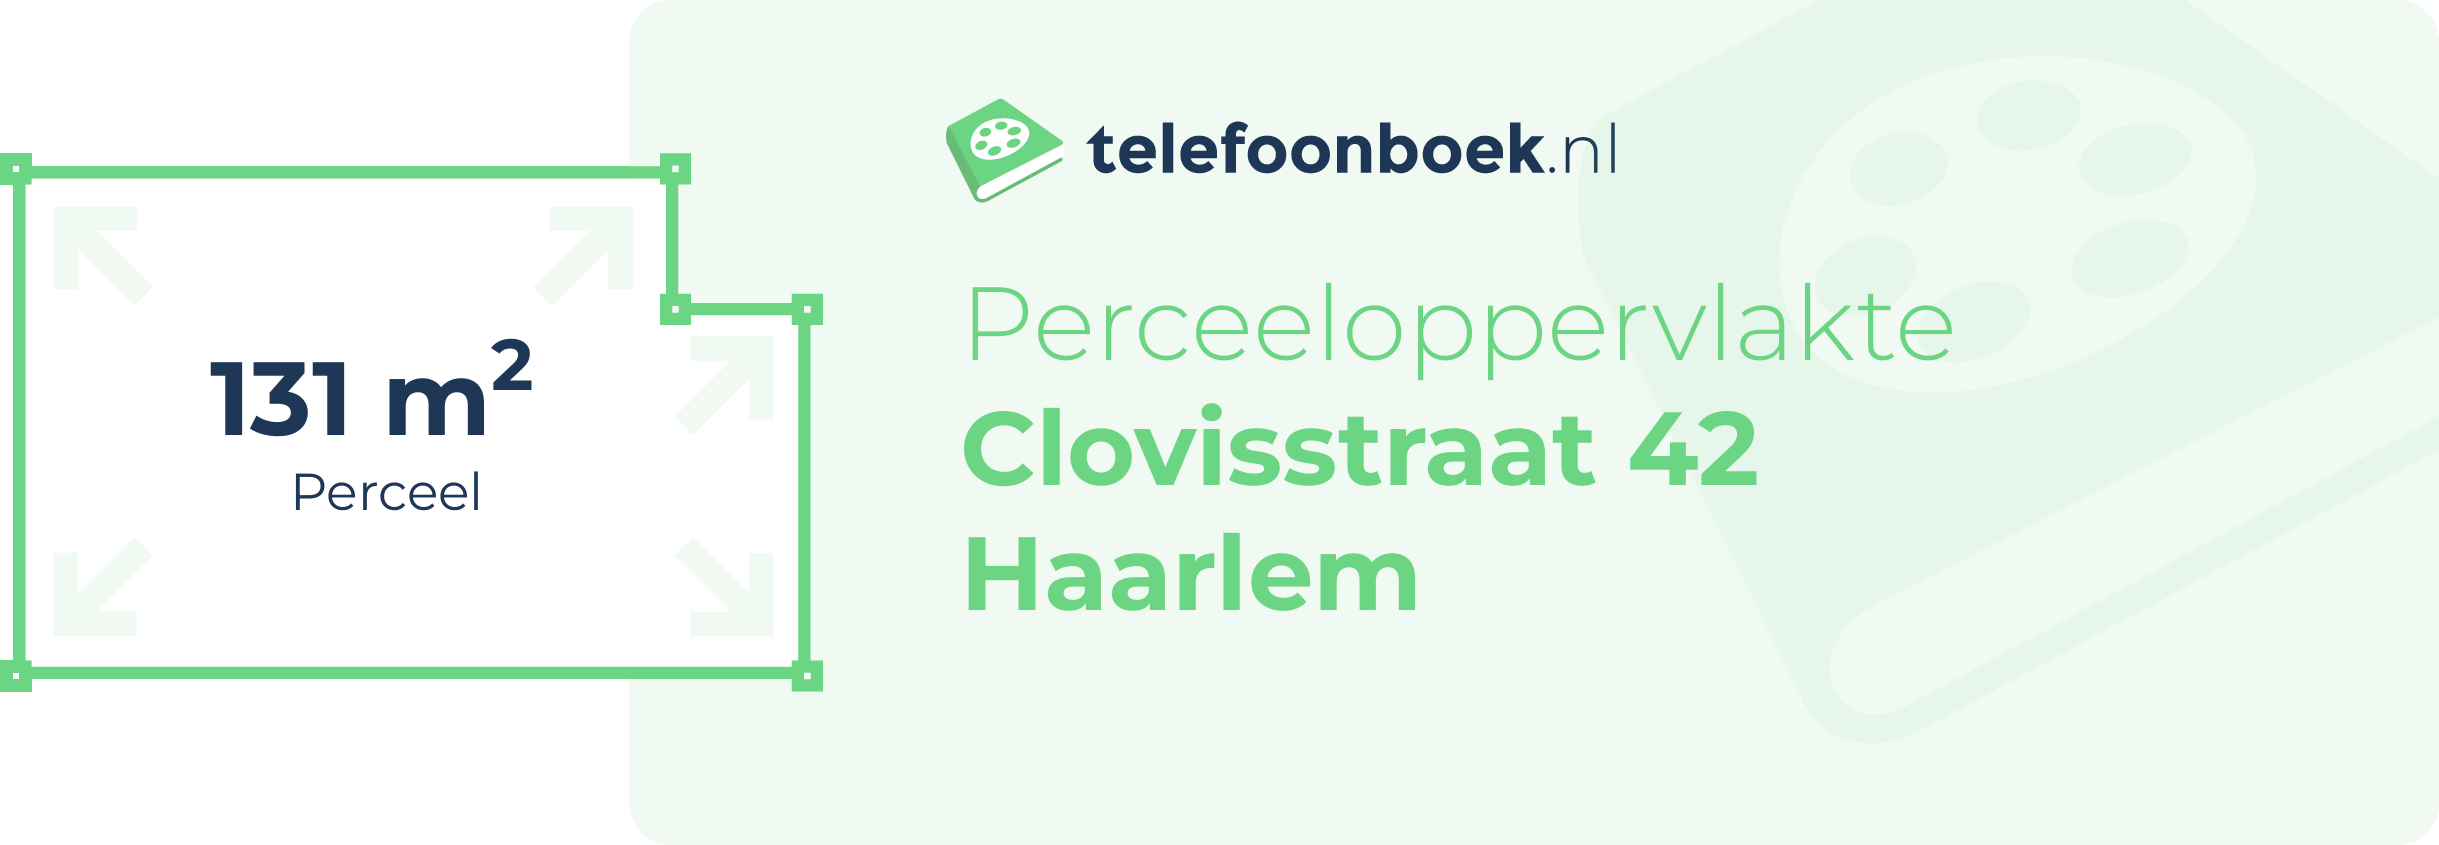 Perceeloppervlakte Clovisstraat 42 Haarlem